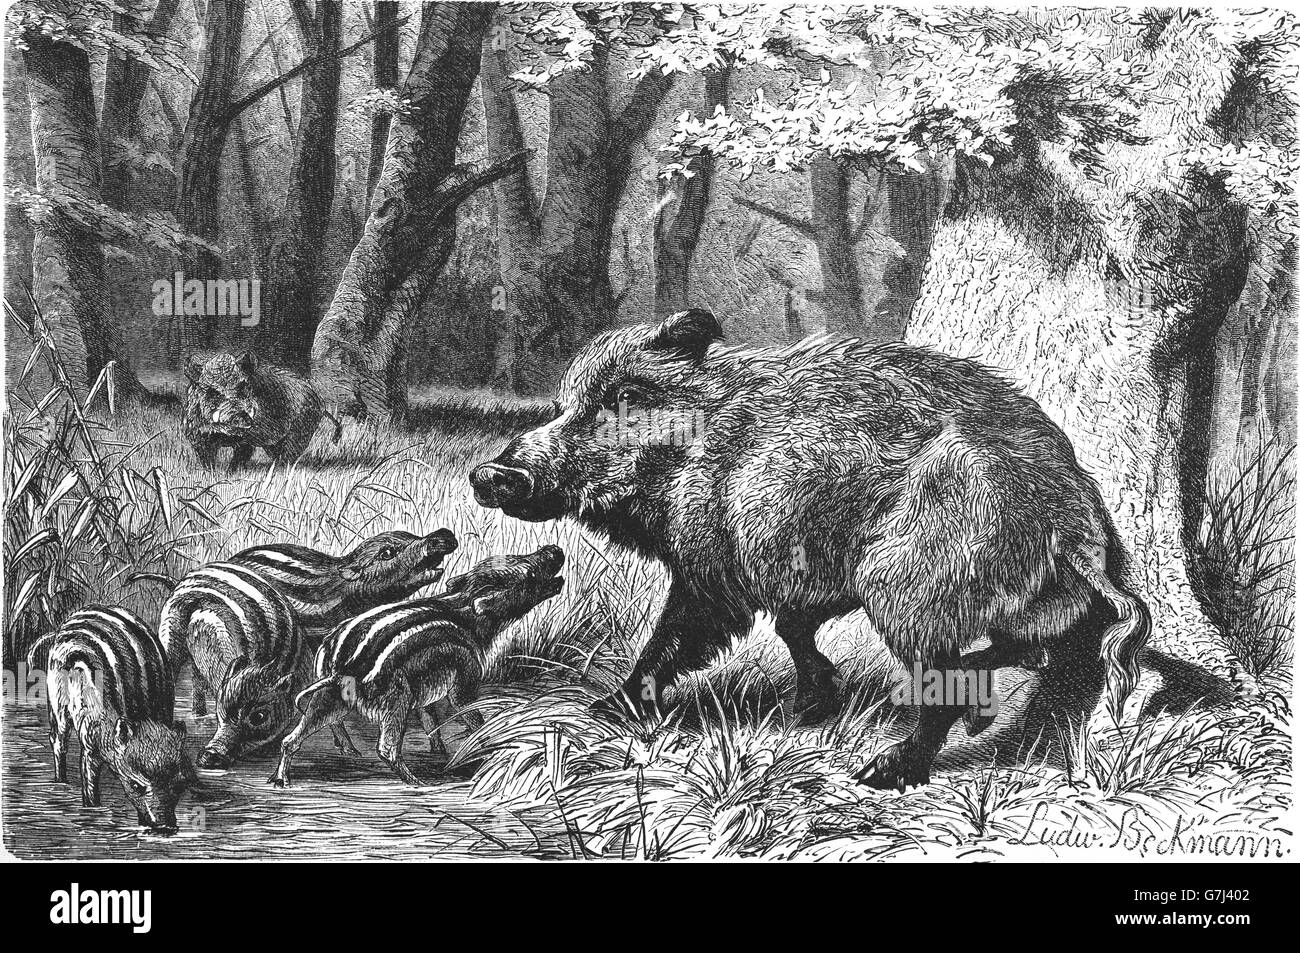 Wild boar, Sus scrofa, wild swine, hog, illustration from book dated 1904 Stock Photo